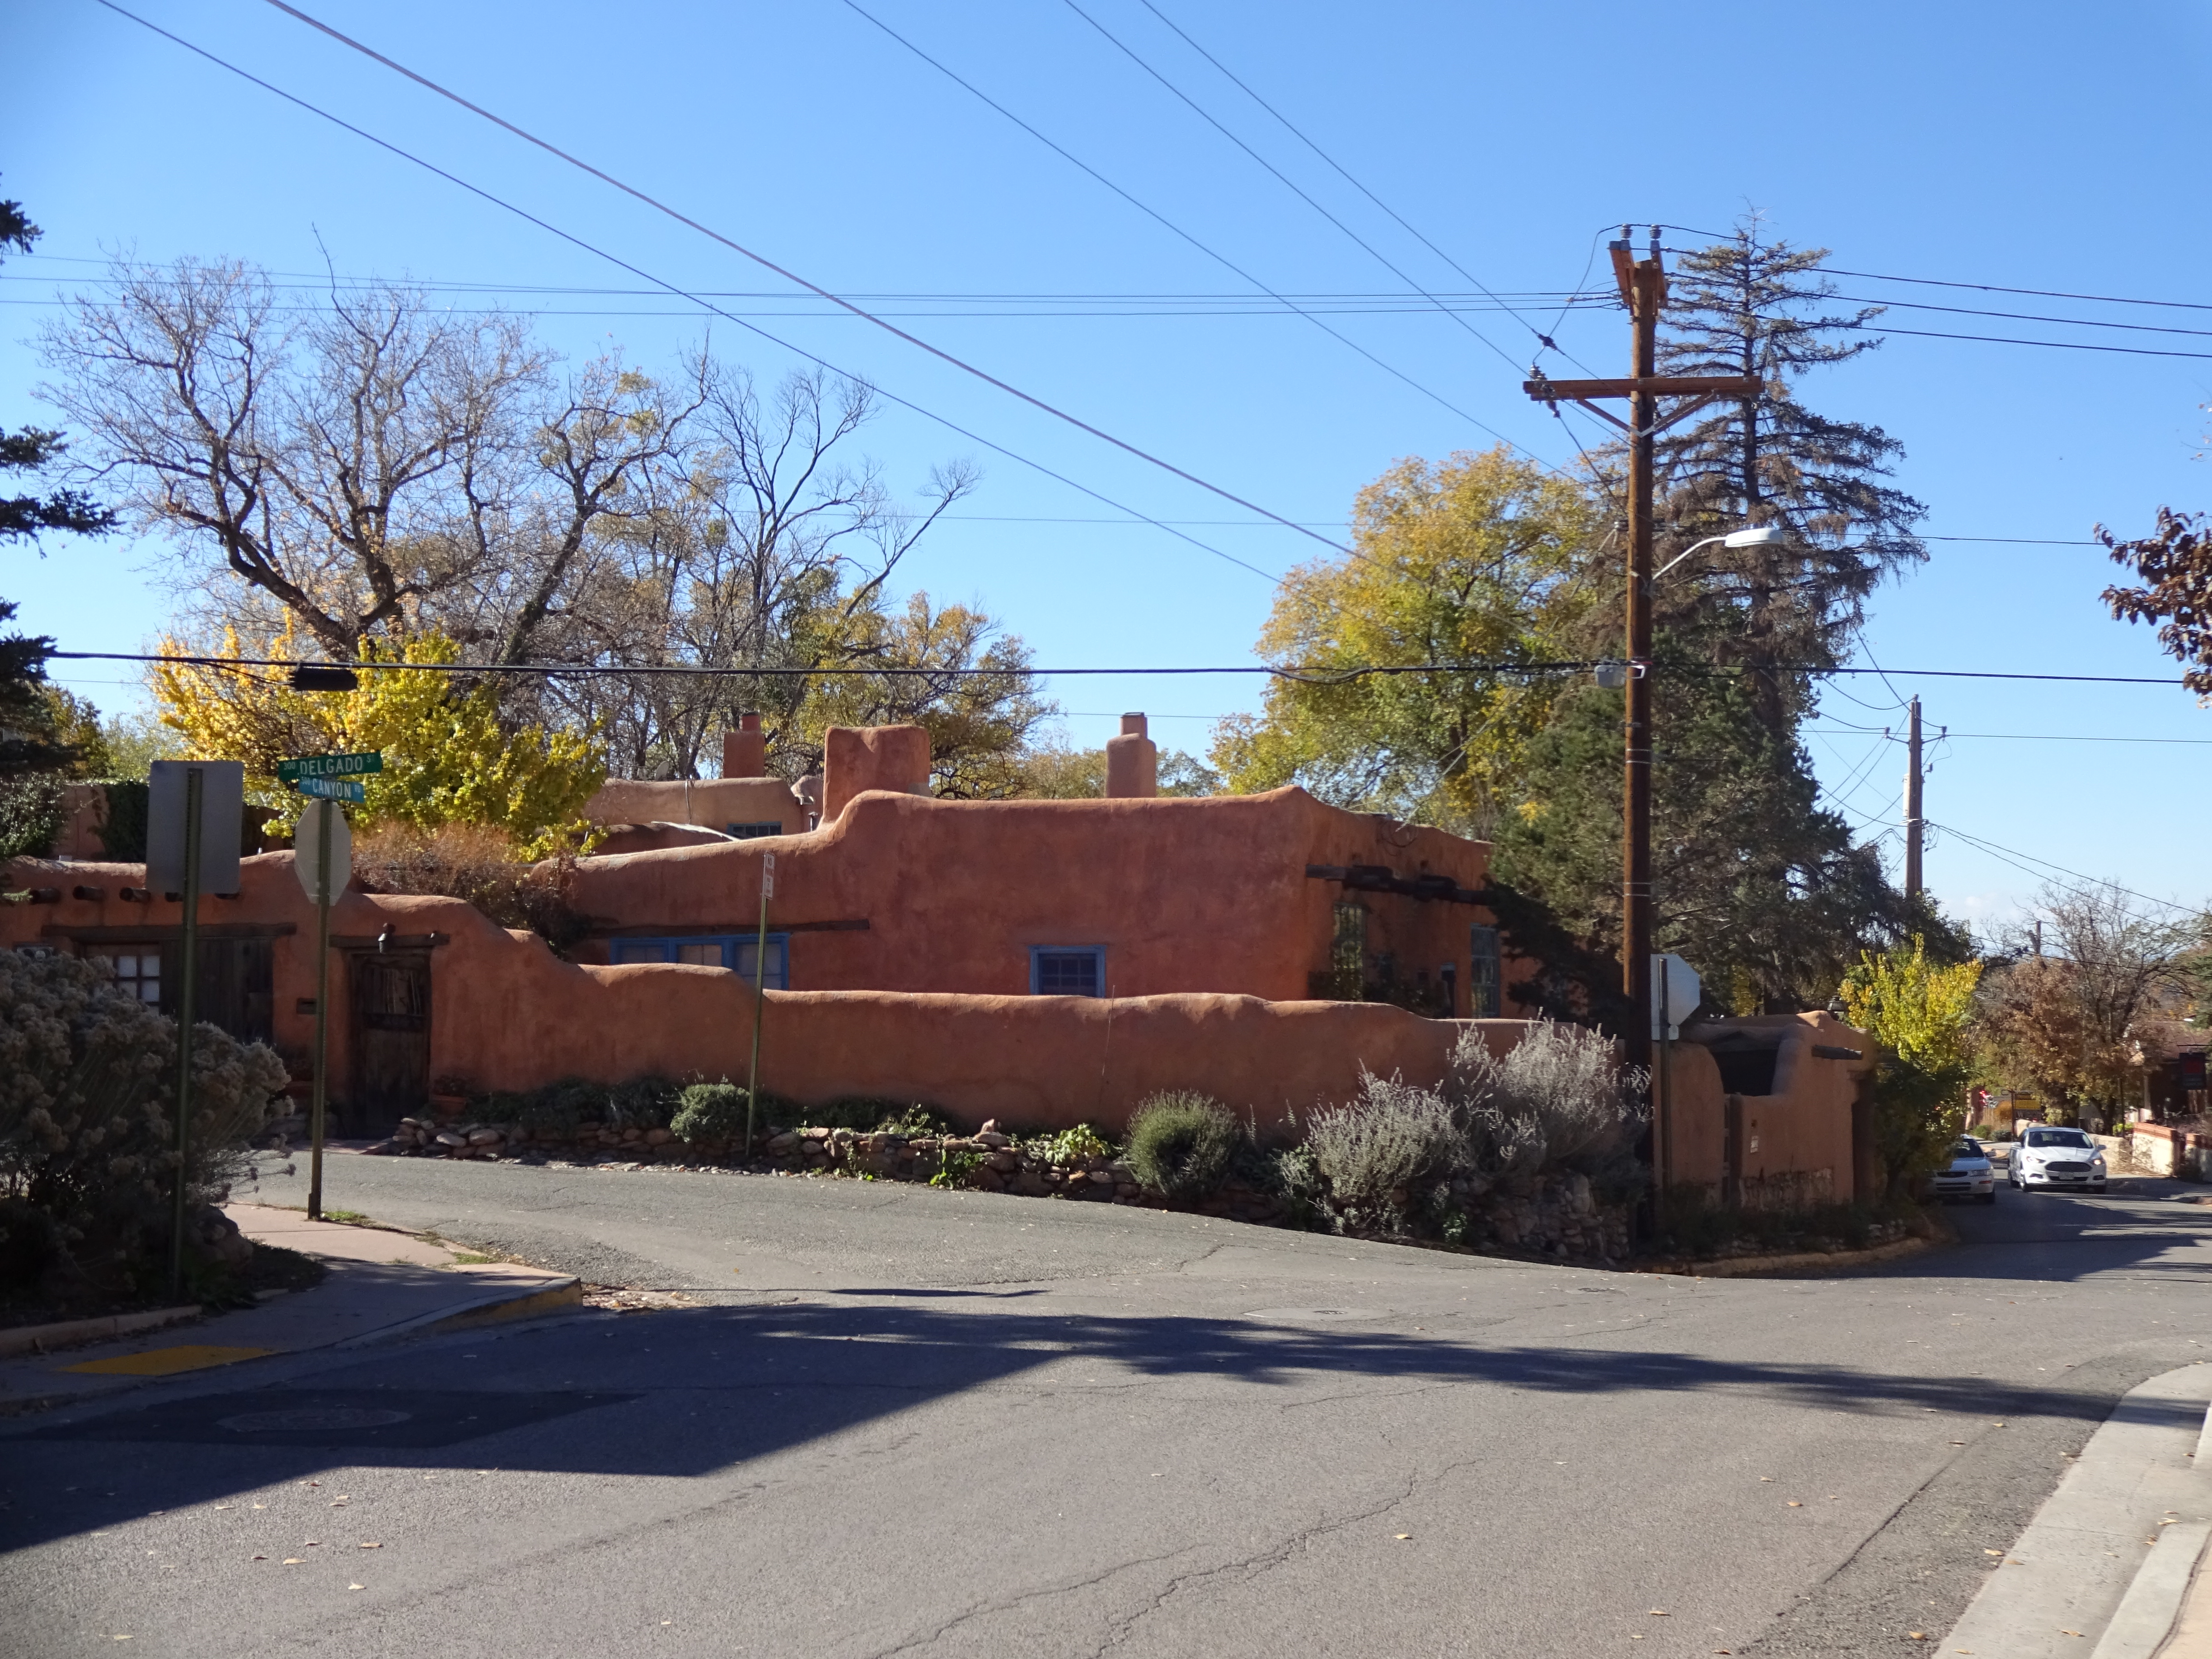 Santa Fe Pueblo architecture